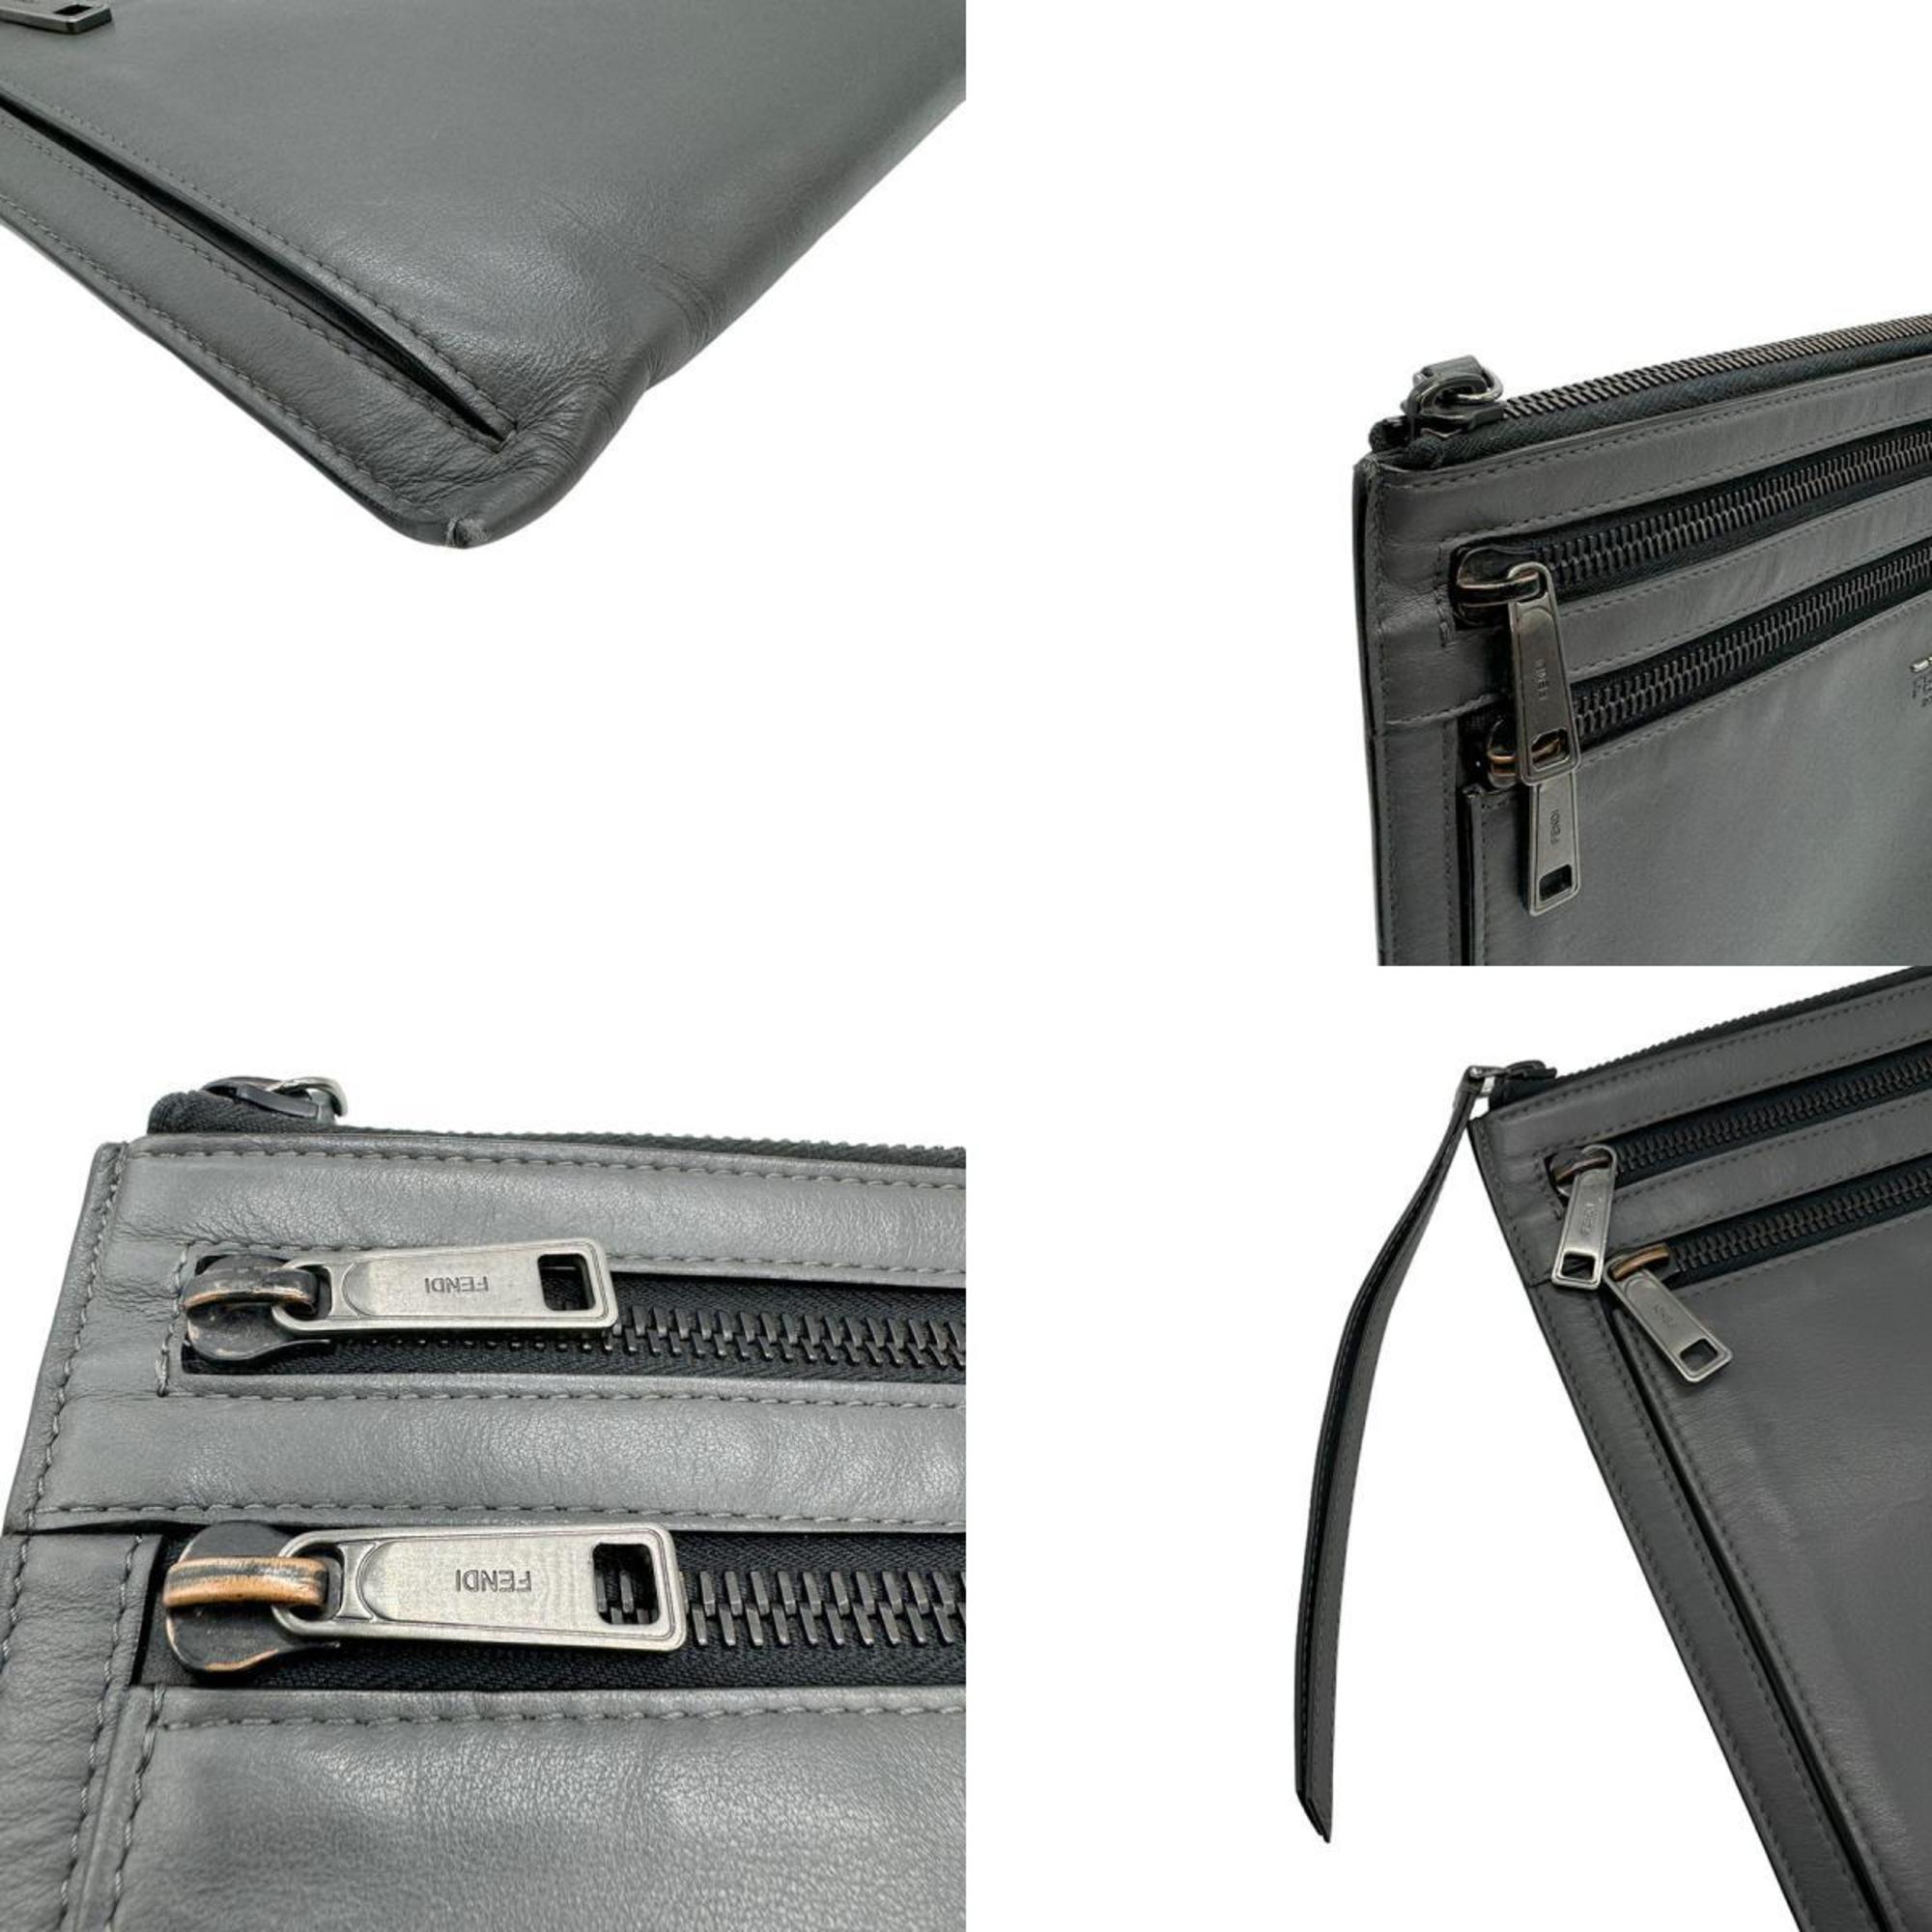 FENDI Clutch bag in leather, grey, for men, 7M0237-OEQ z0633